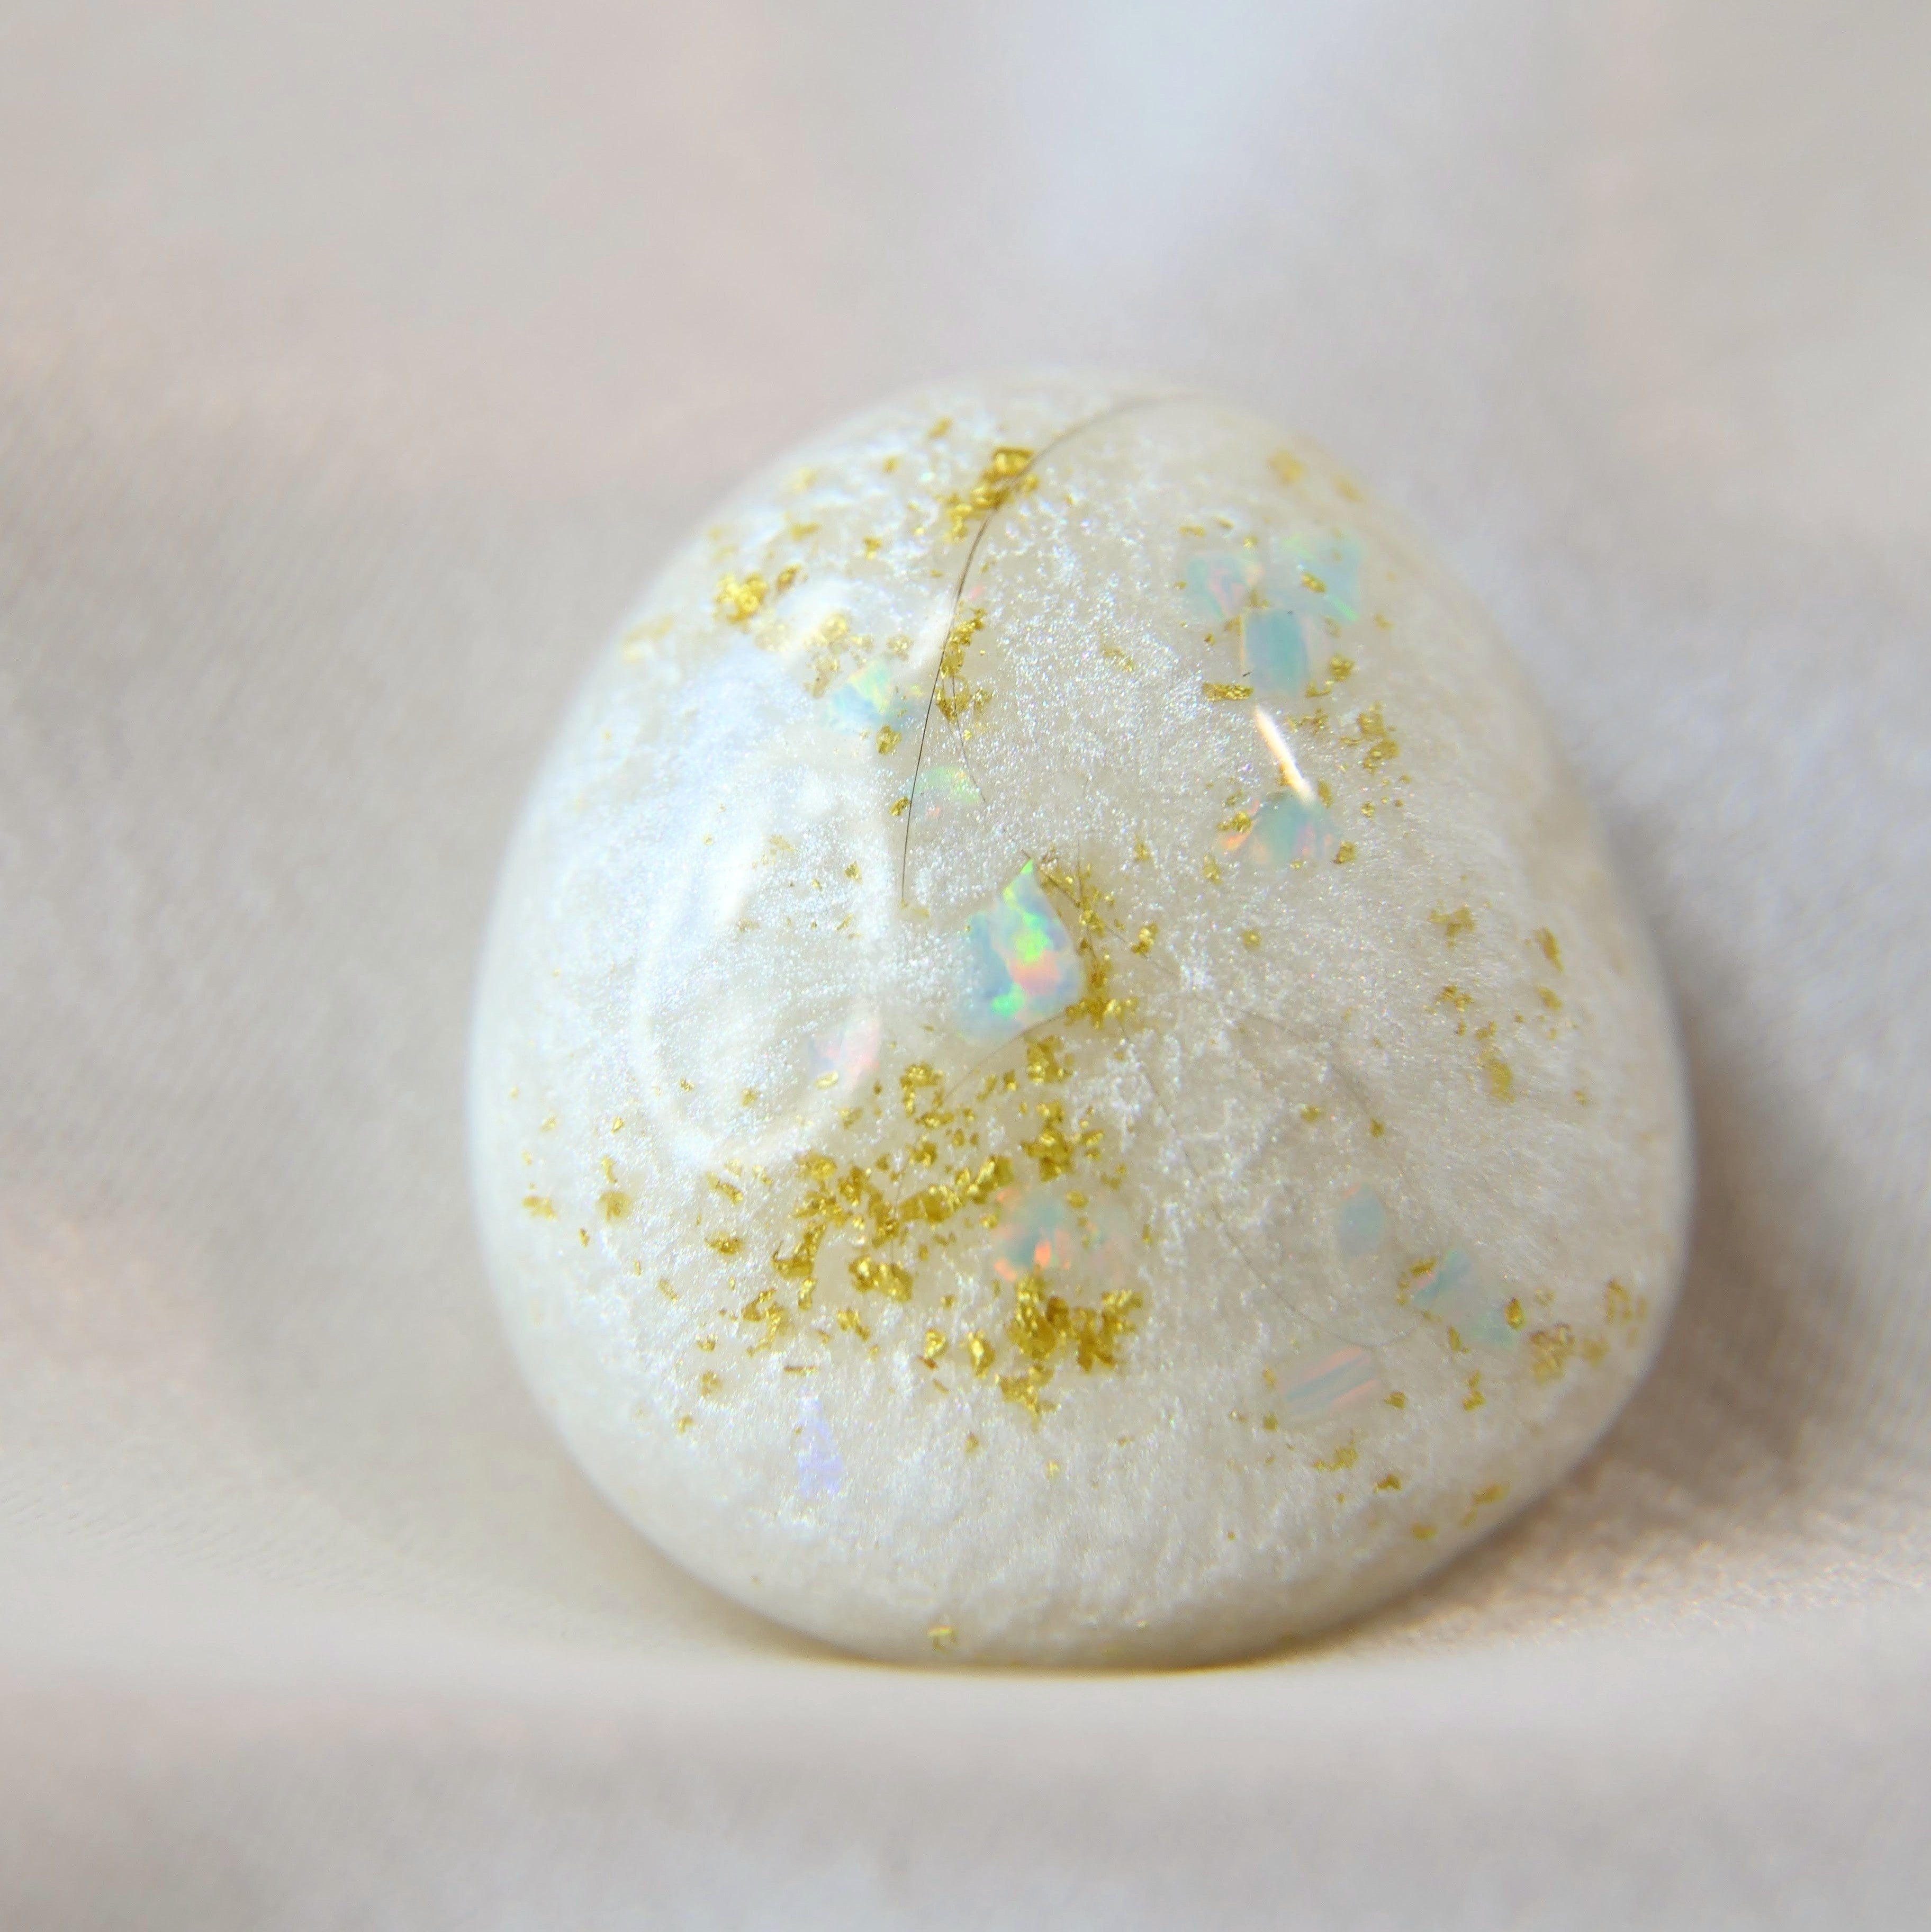 Breastmilk, Hair, Gold fleck and pearl white shimmer with cornflower blue opal keepsake stone